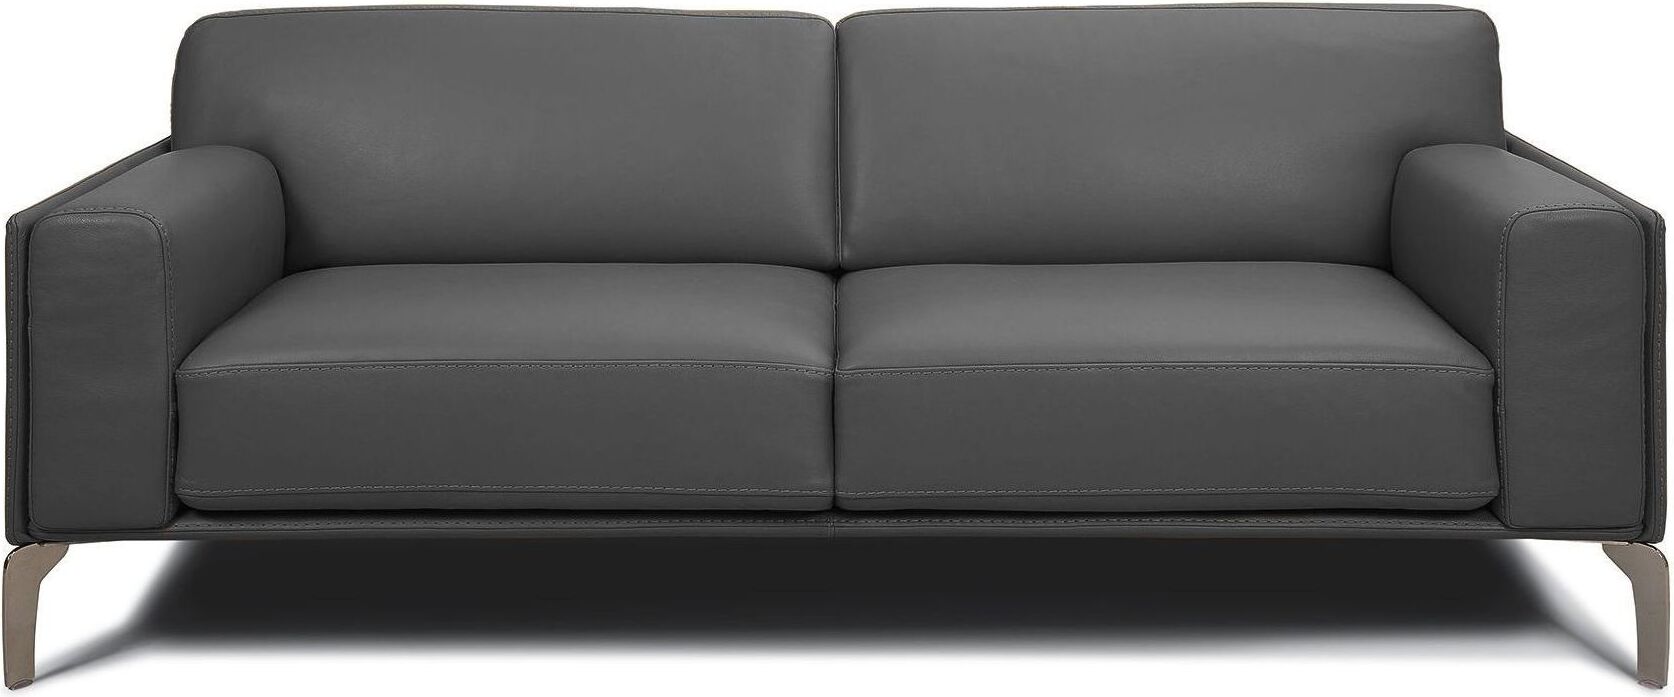 Alessia Dark Grey Leather Sofa By